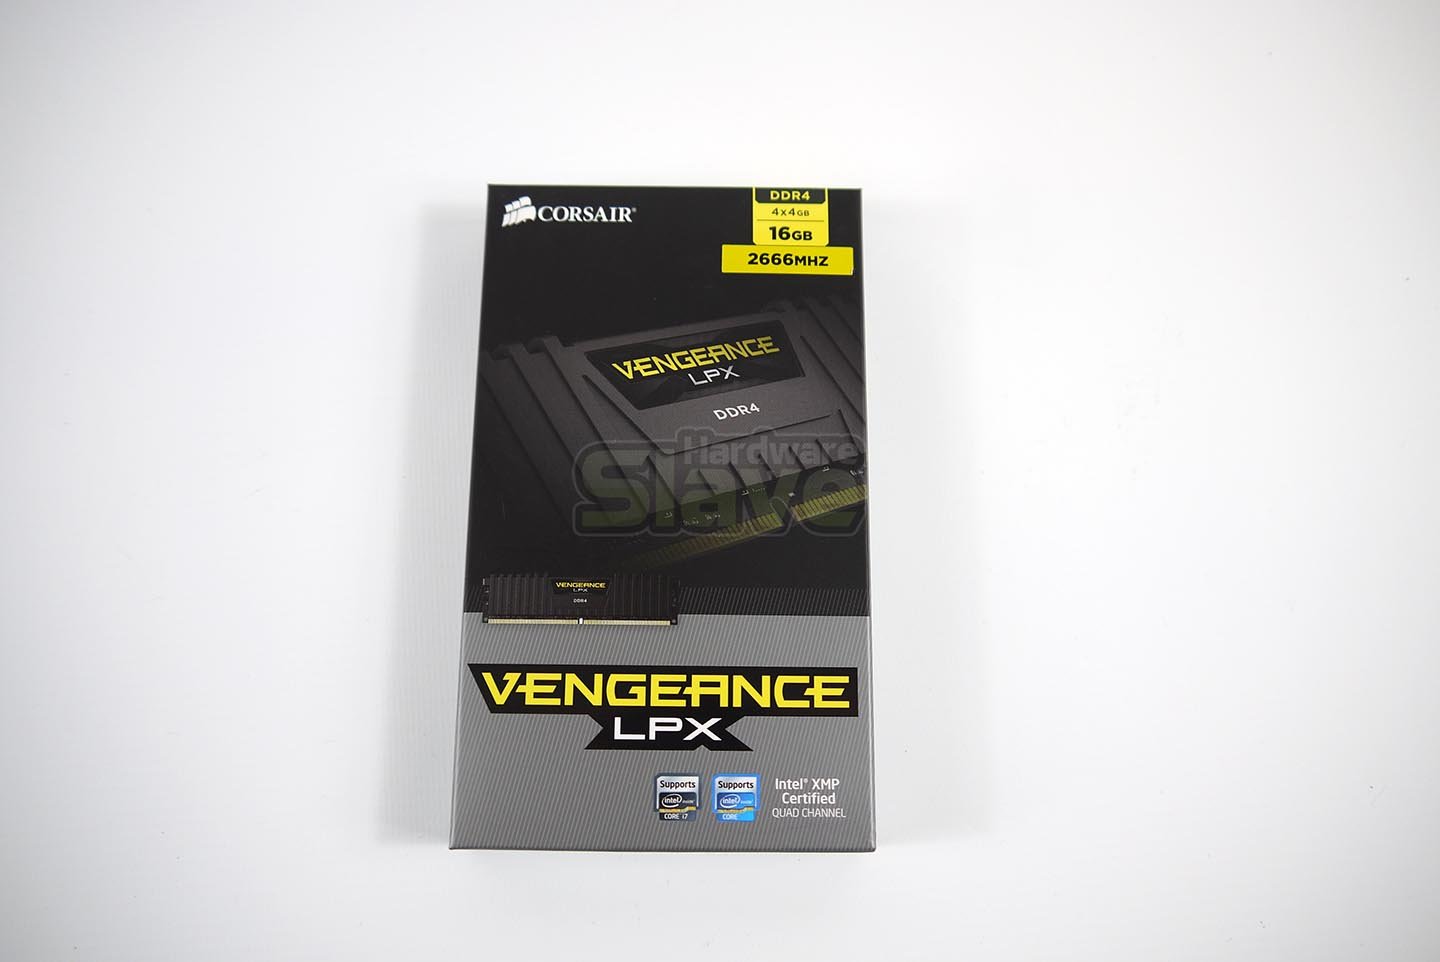 Corsair Vengeance LPX DDR4 2666Mhz 16Gb Memory